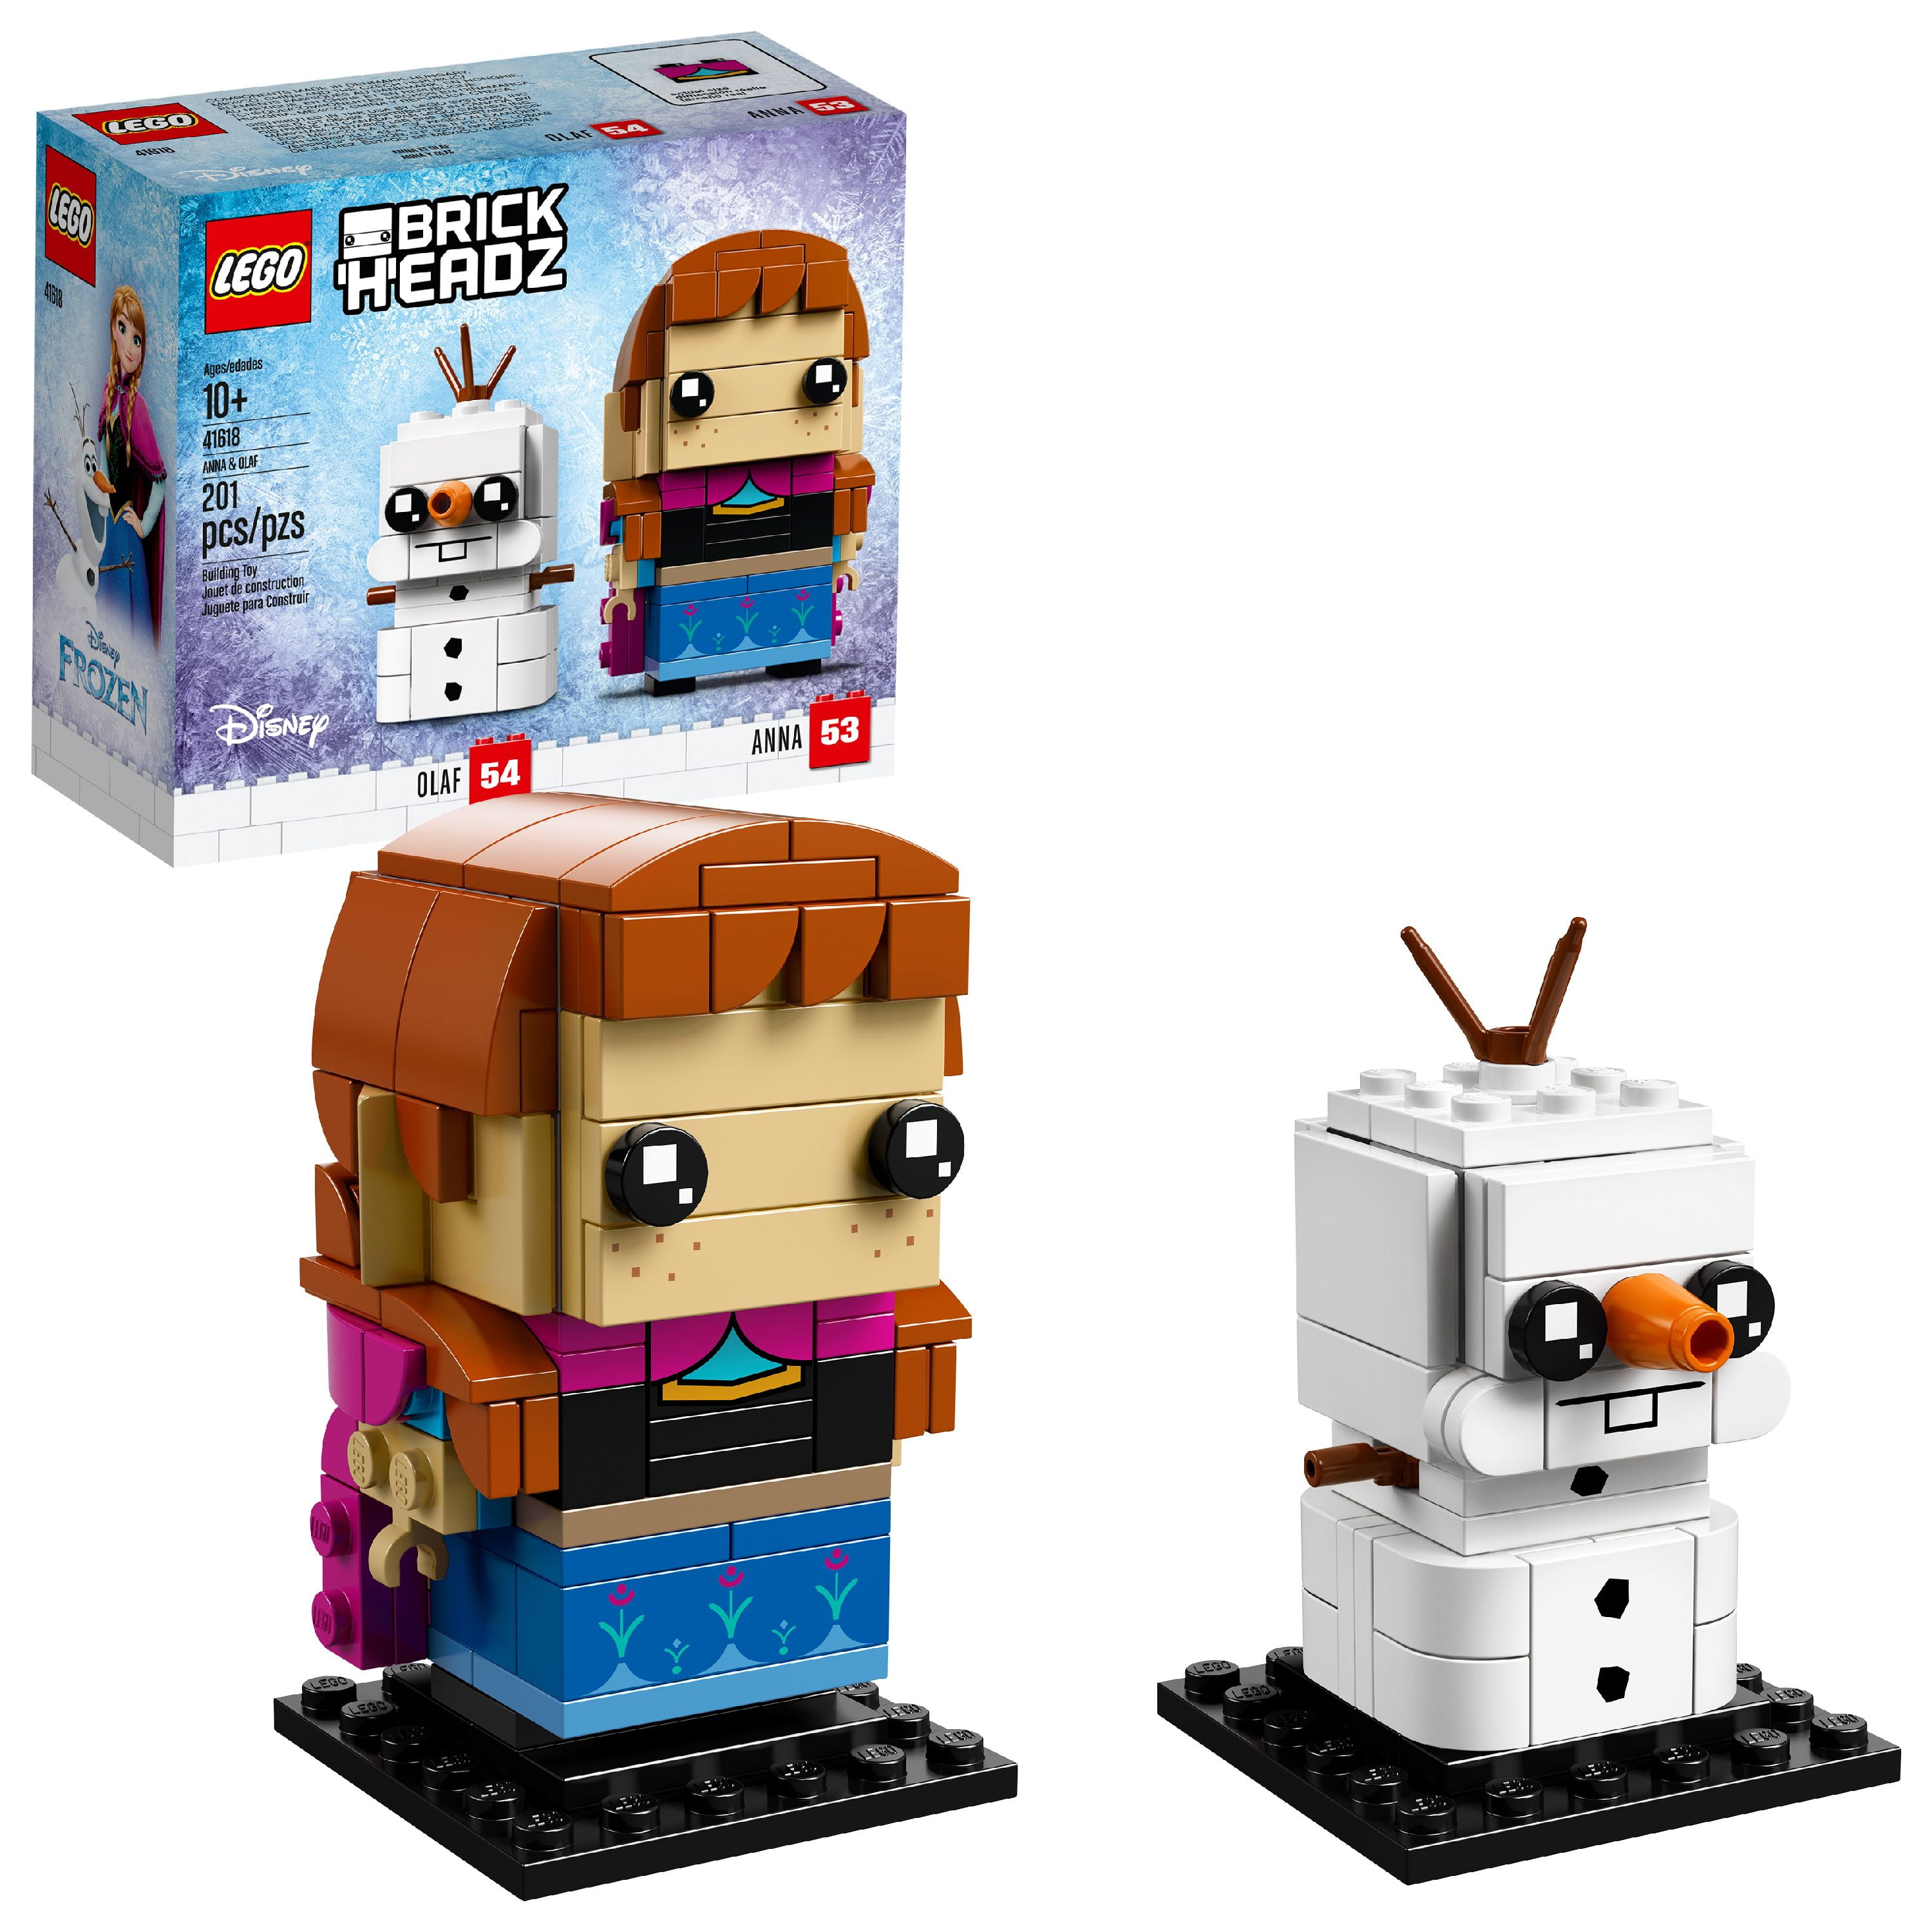 LEGO BrickHeadz 2018 Star-Lord 41606 for sale online